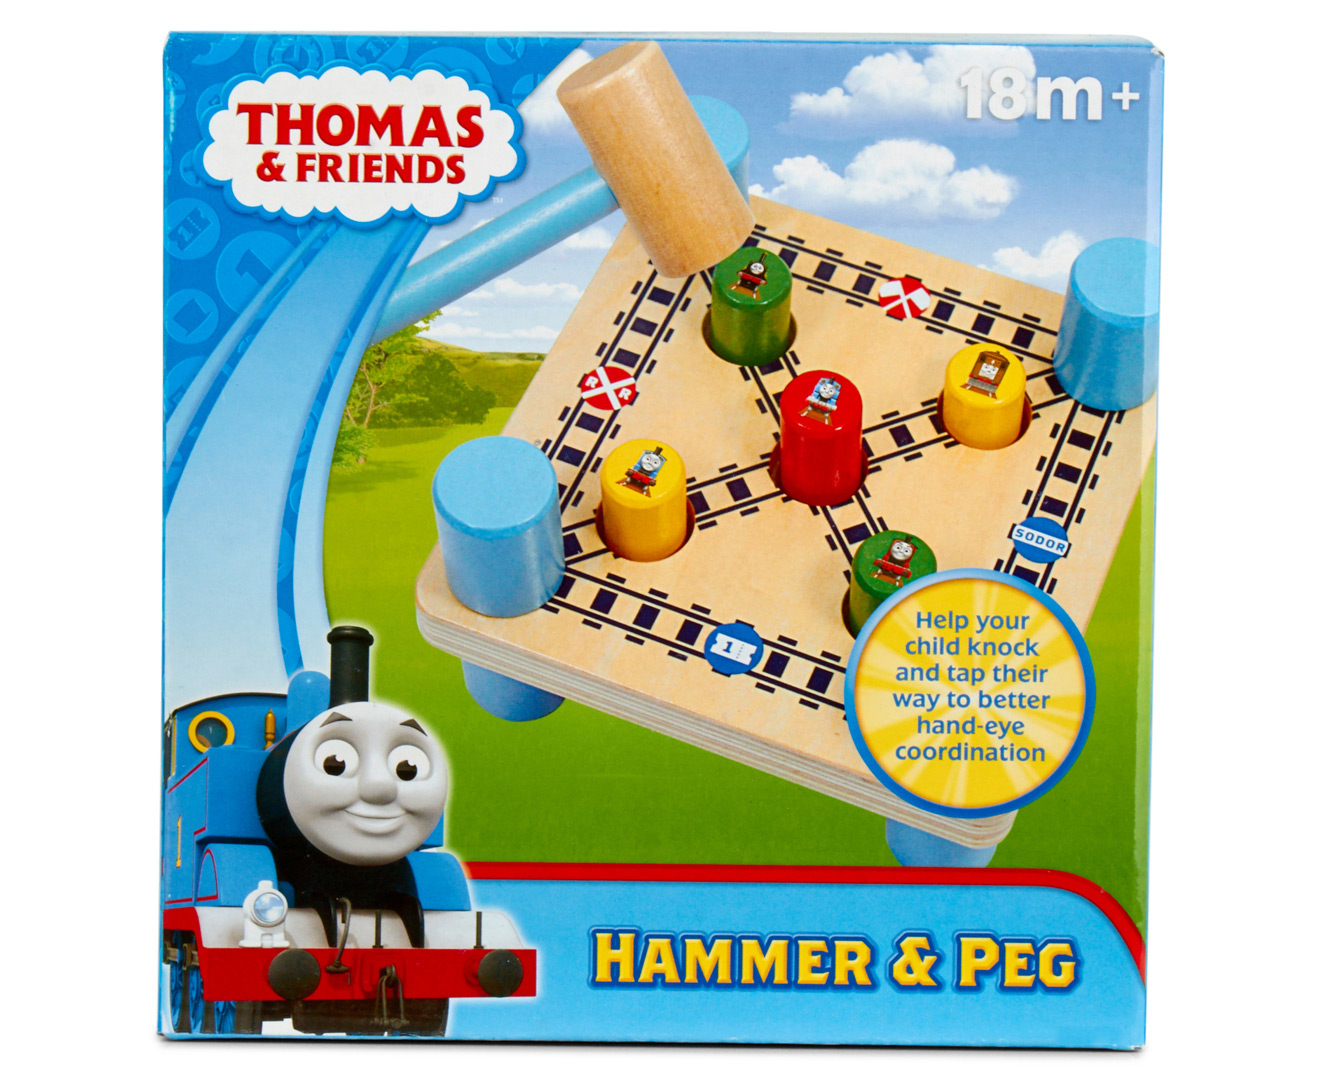 Thomas & Friends Hammer & Peg Game Toy - Multi